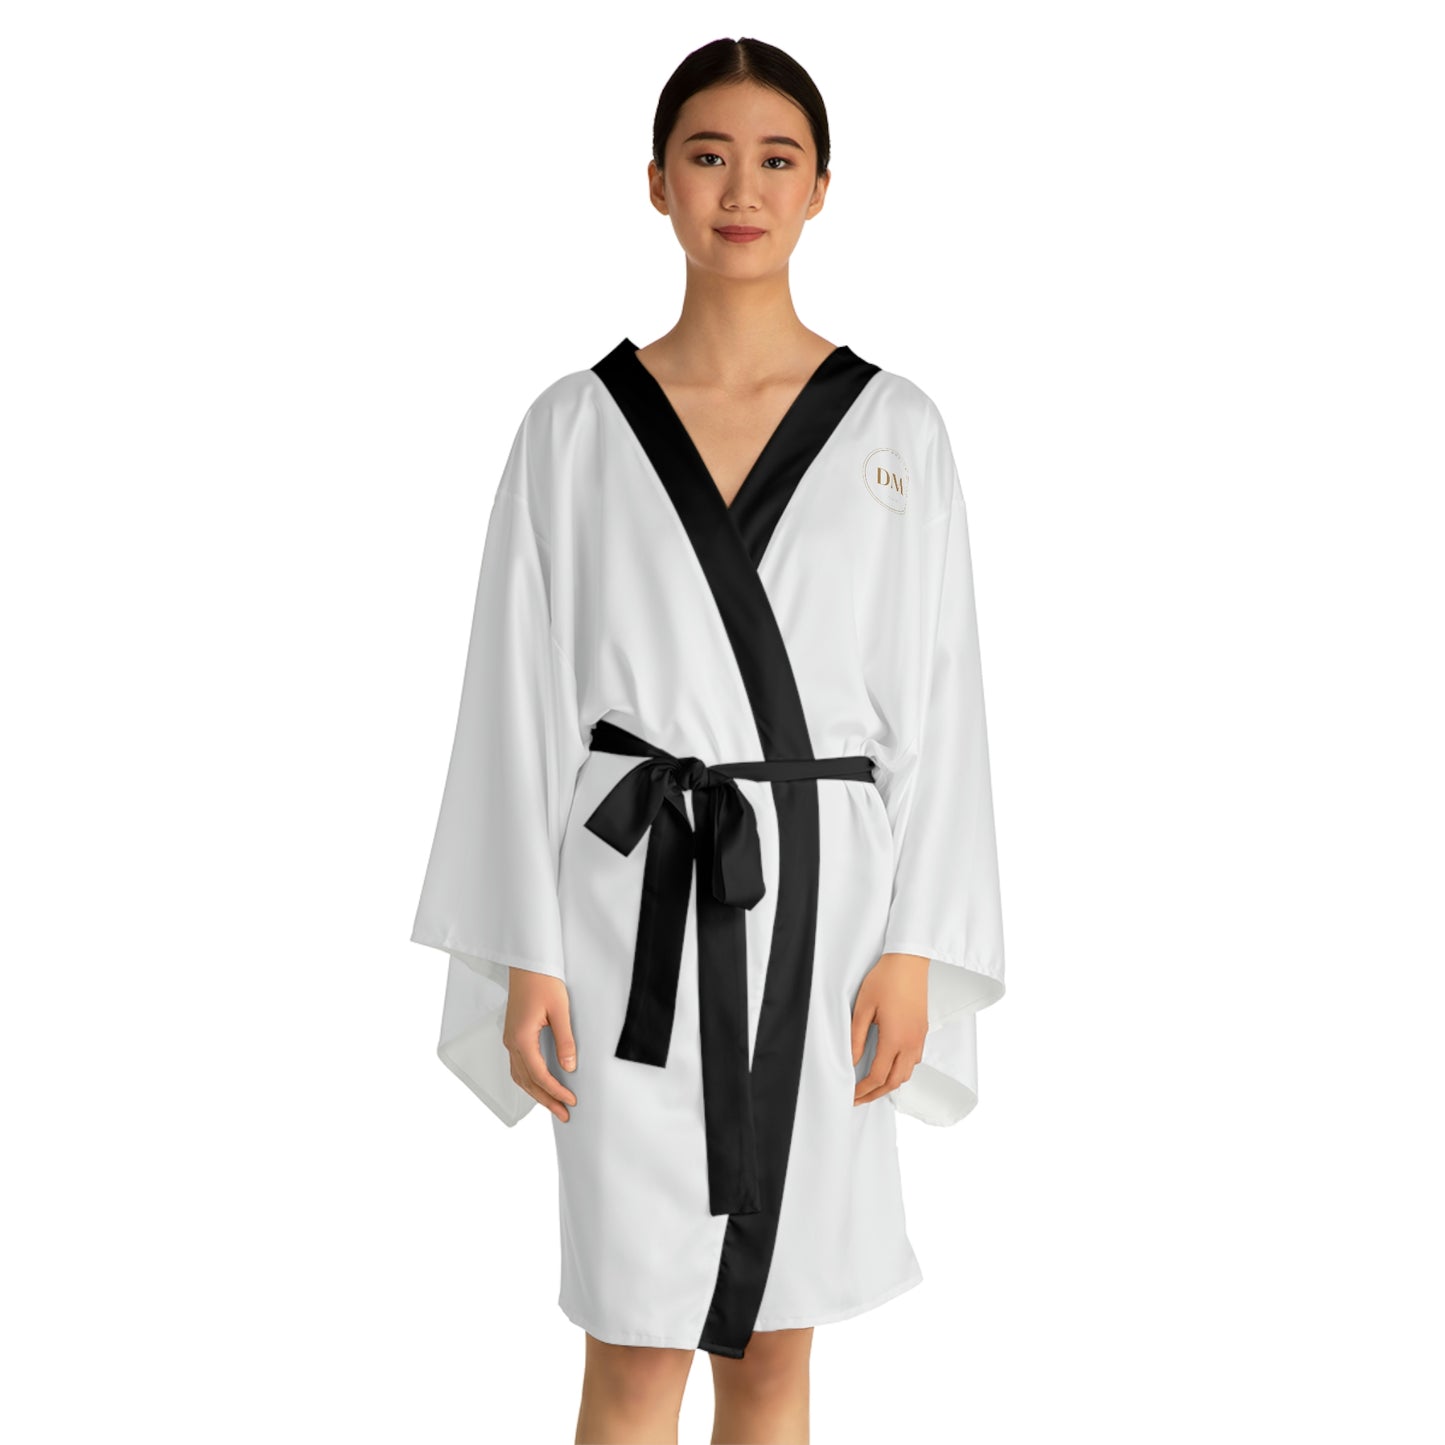 DM Long Sleeve Kimono Robe